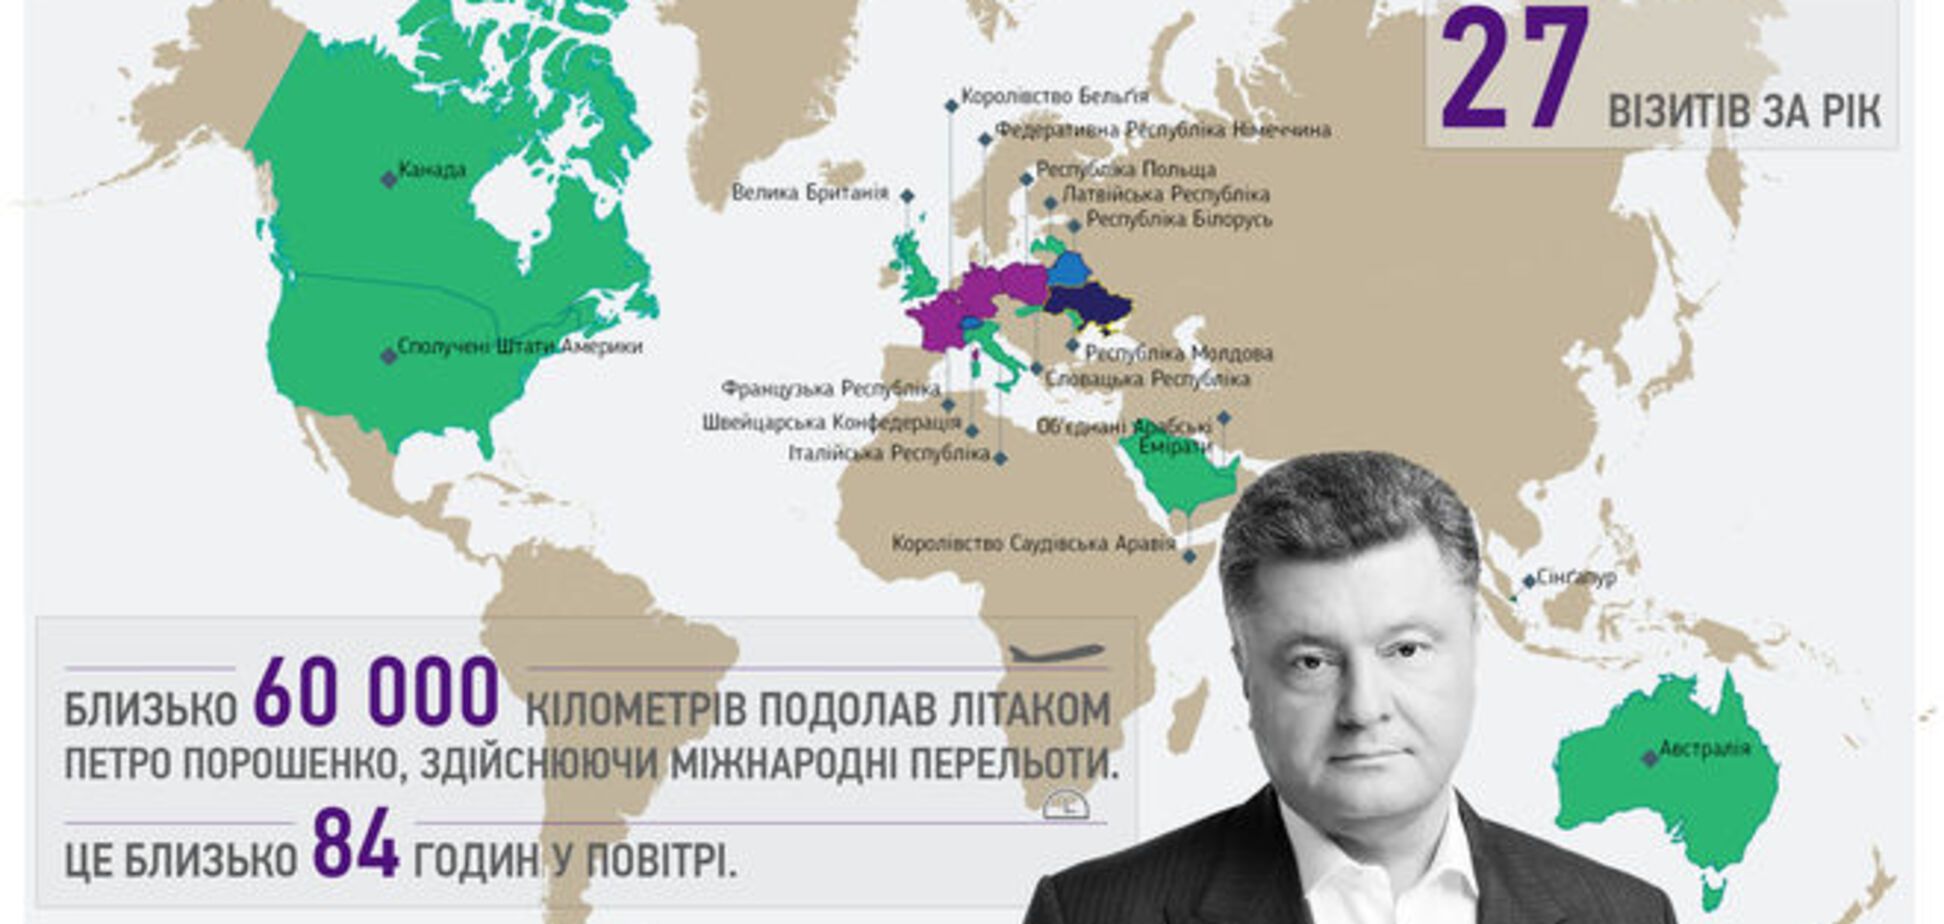 84 часа в воздухе. Куда летал Порошенко за год президентства: инфографика